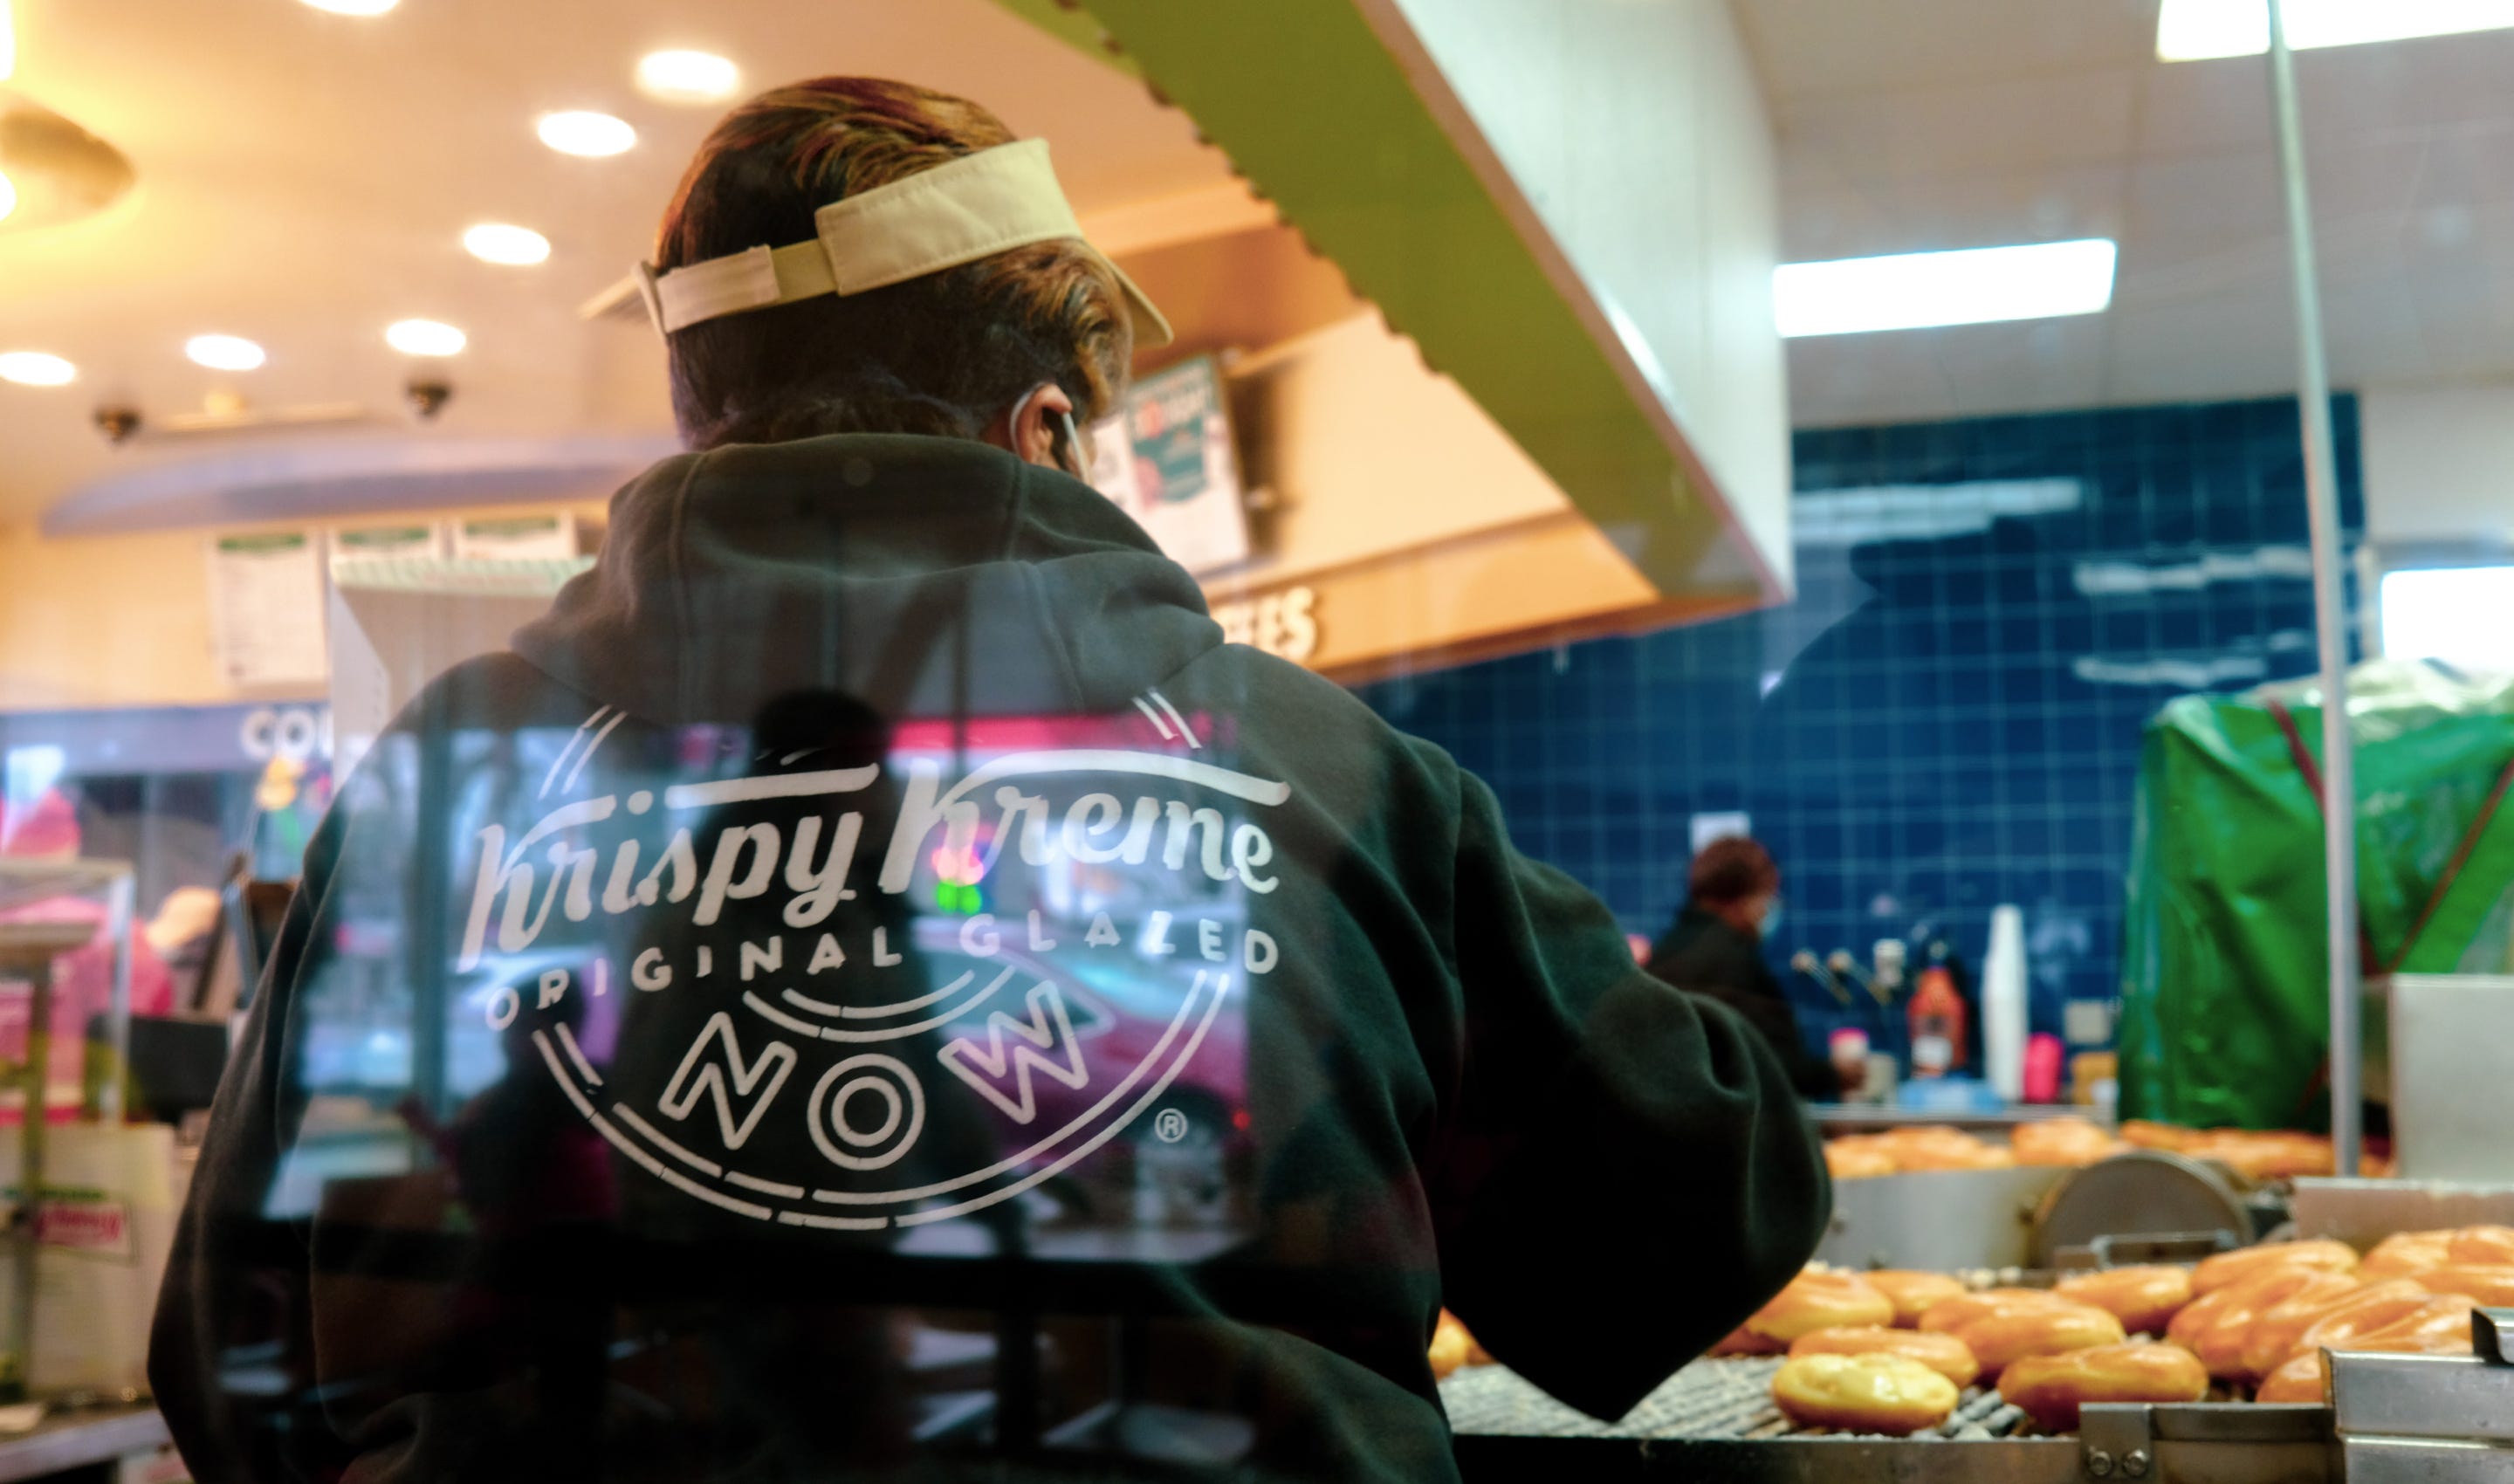 Lady serving fresh Krispy Kreme doughnuts